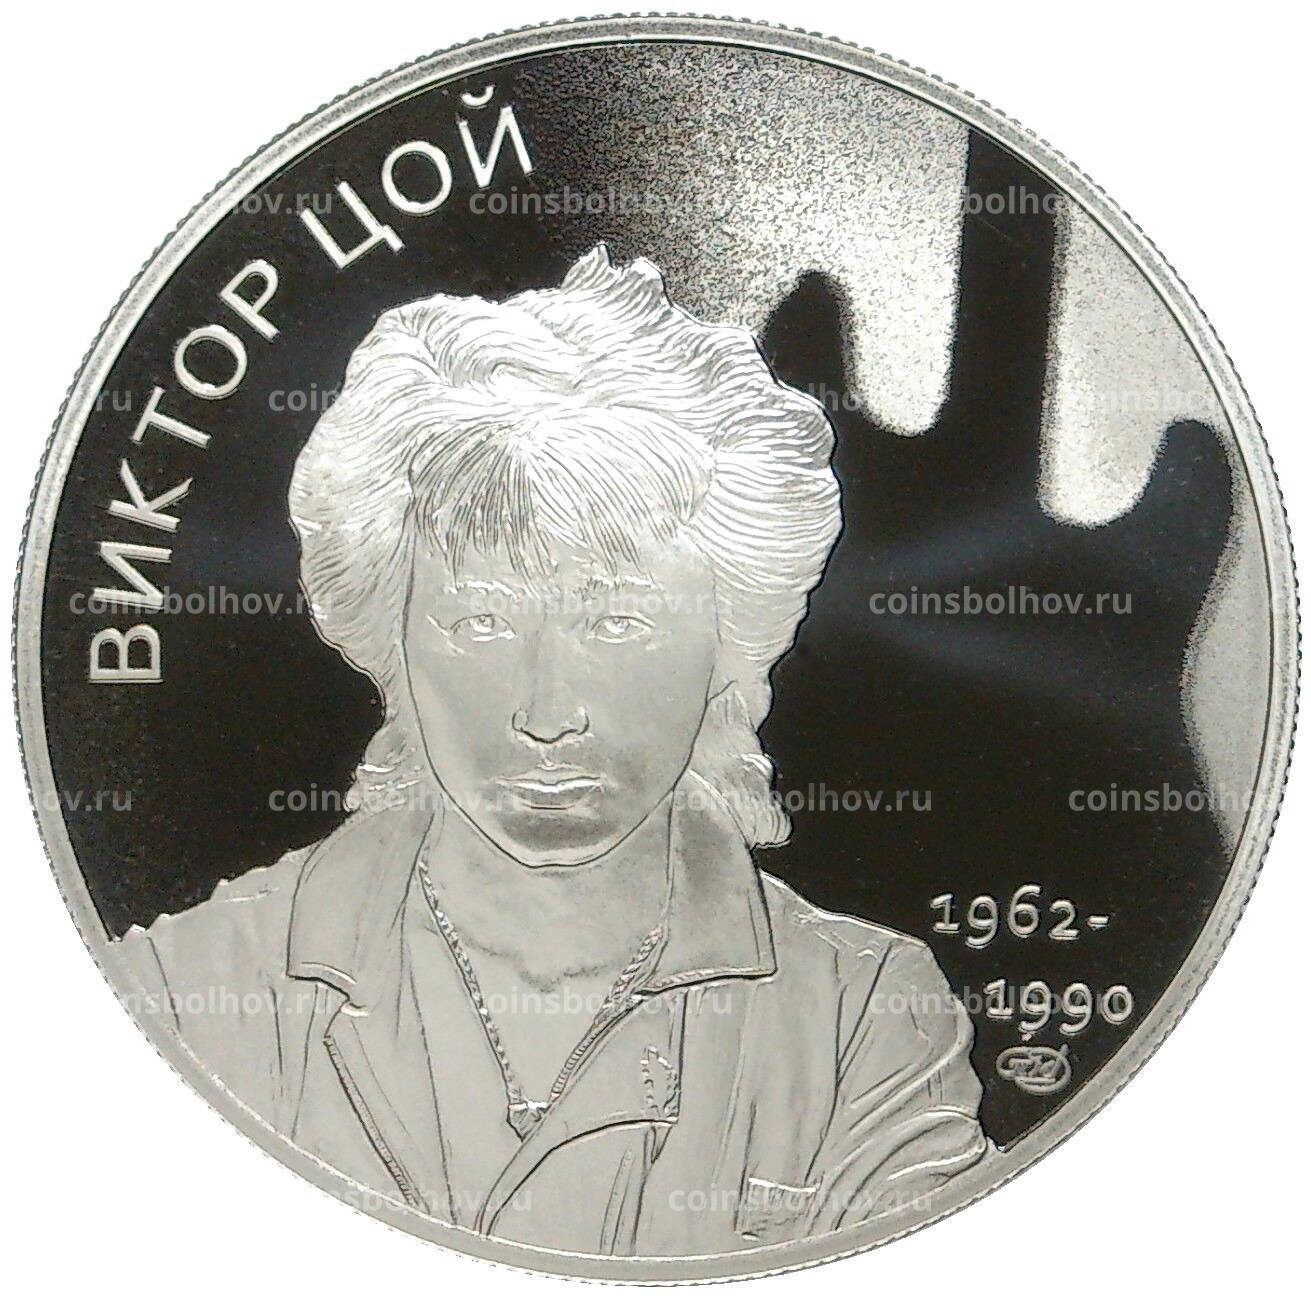 Coinsbolhov. Монета Цой 2022.